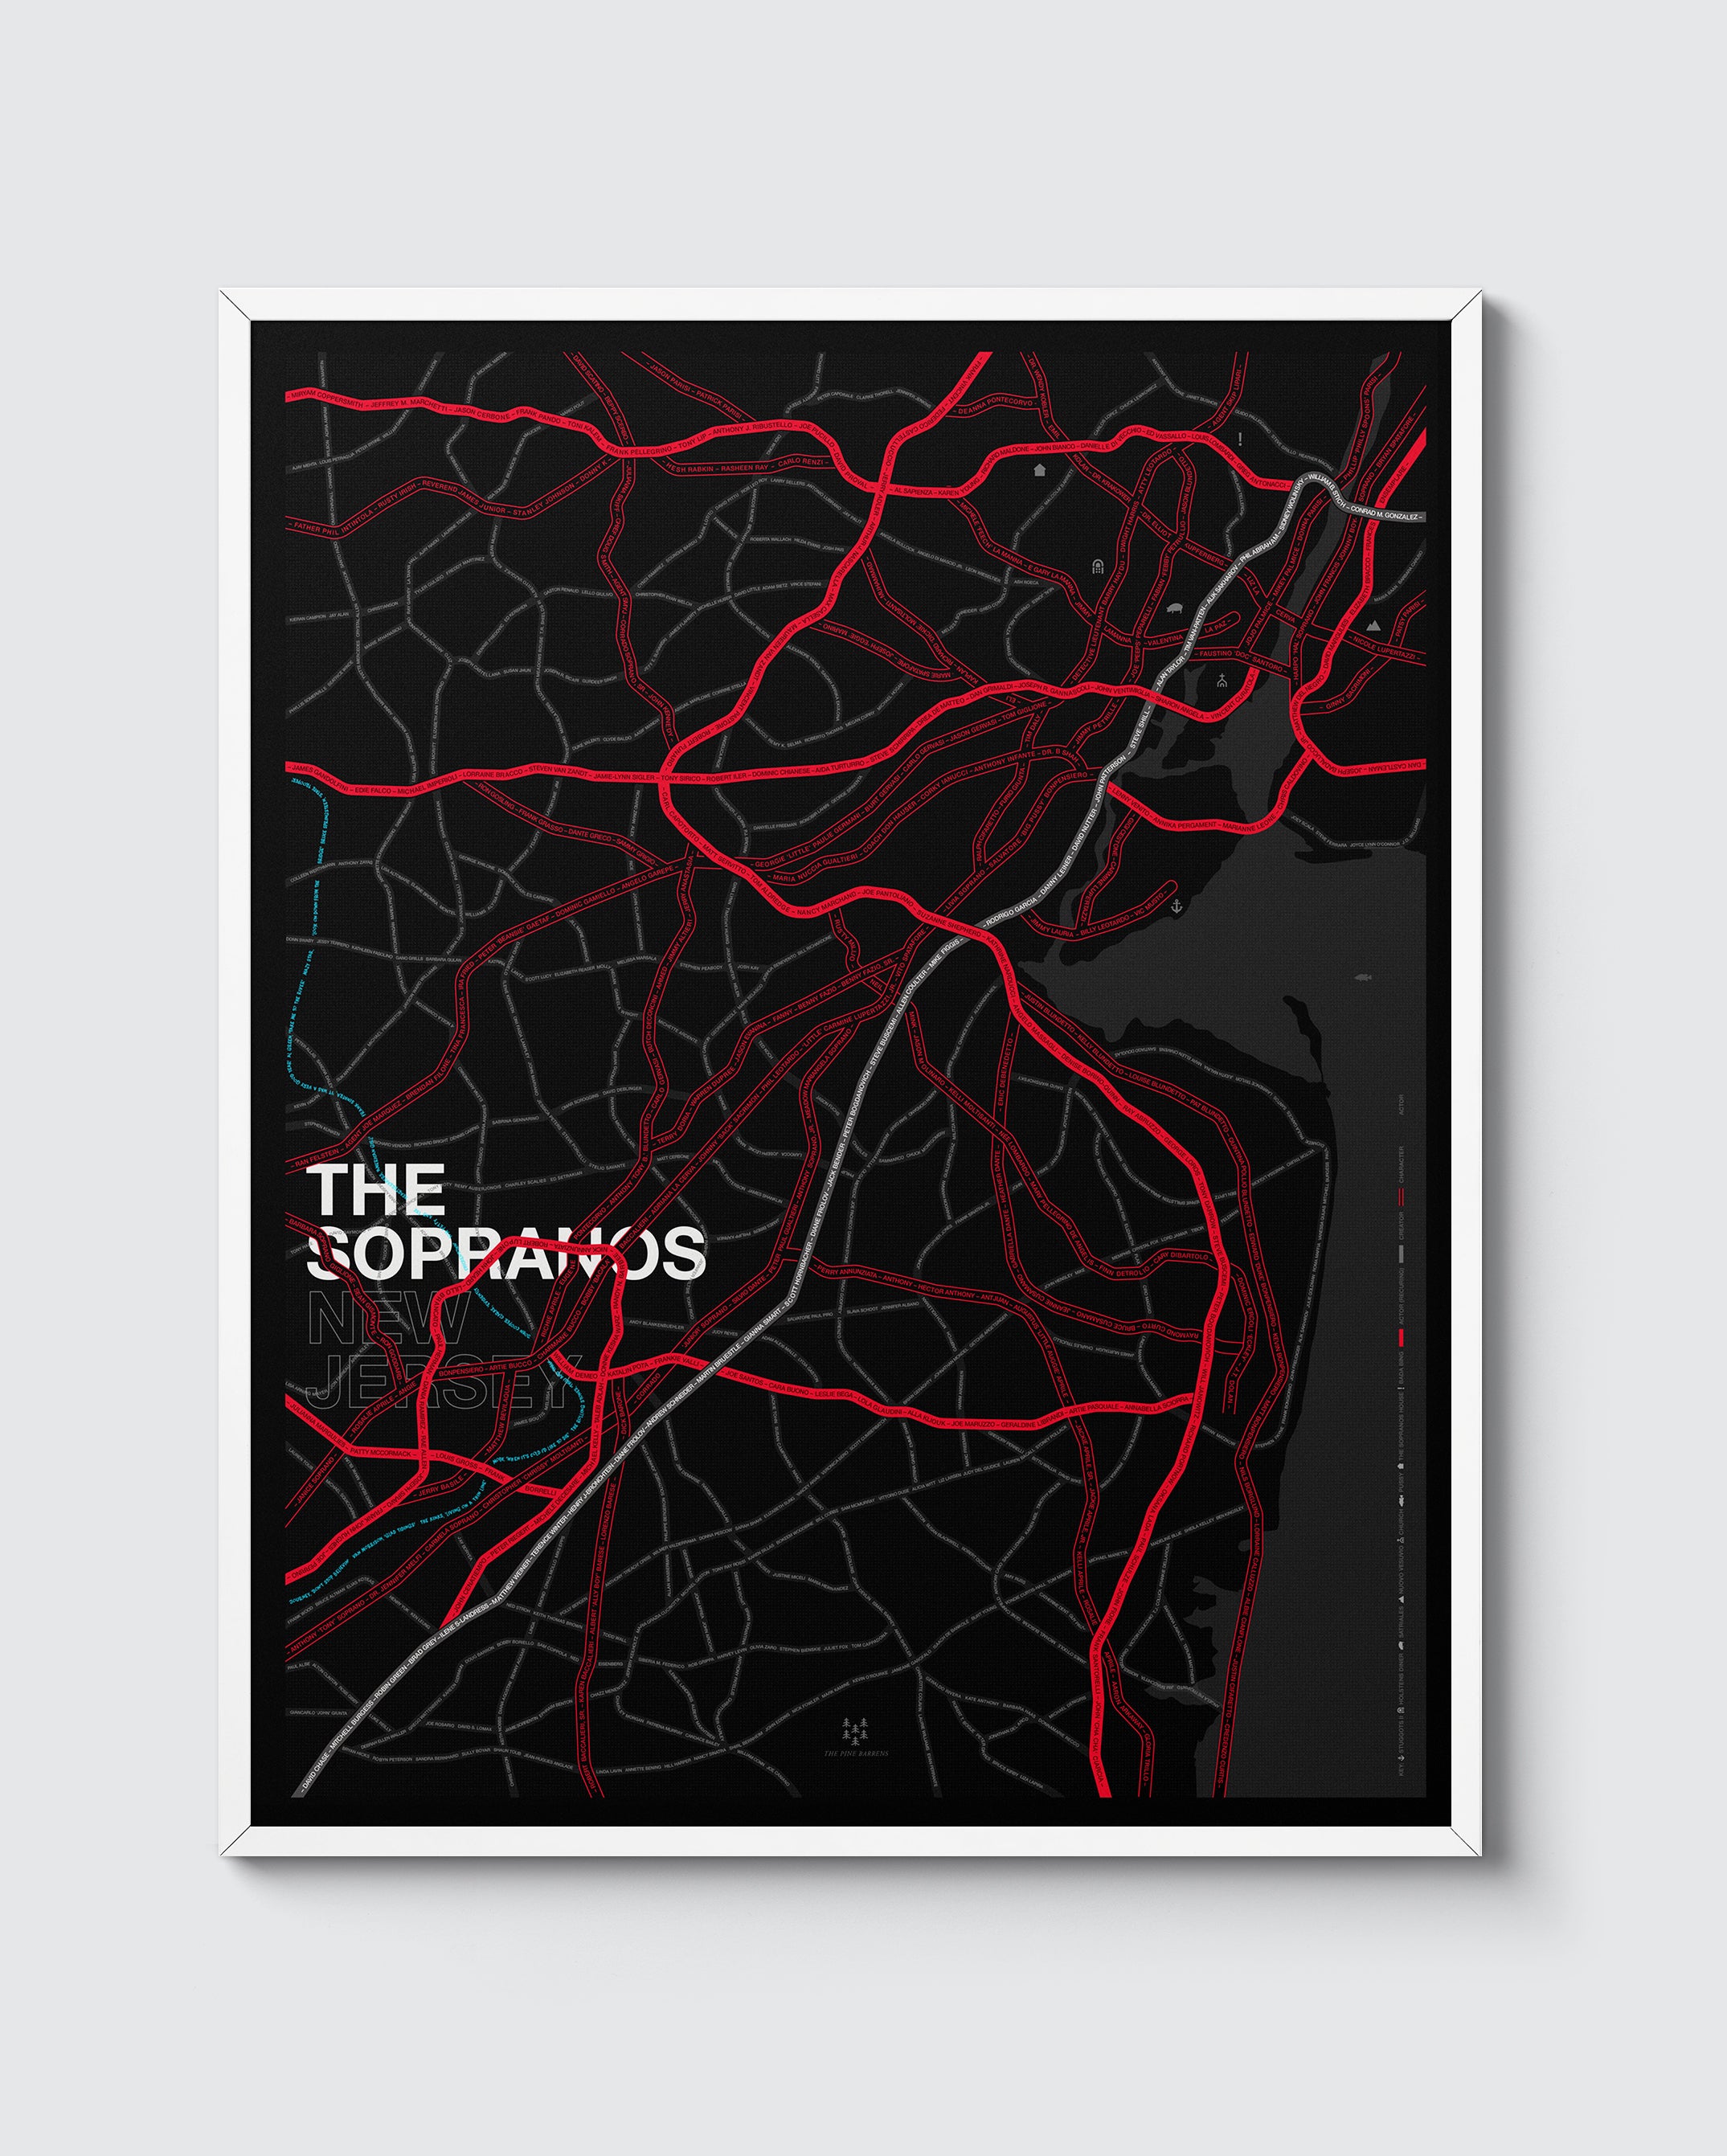 Sopranos, New Jersey – Night print